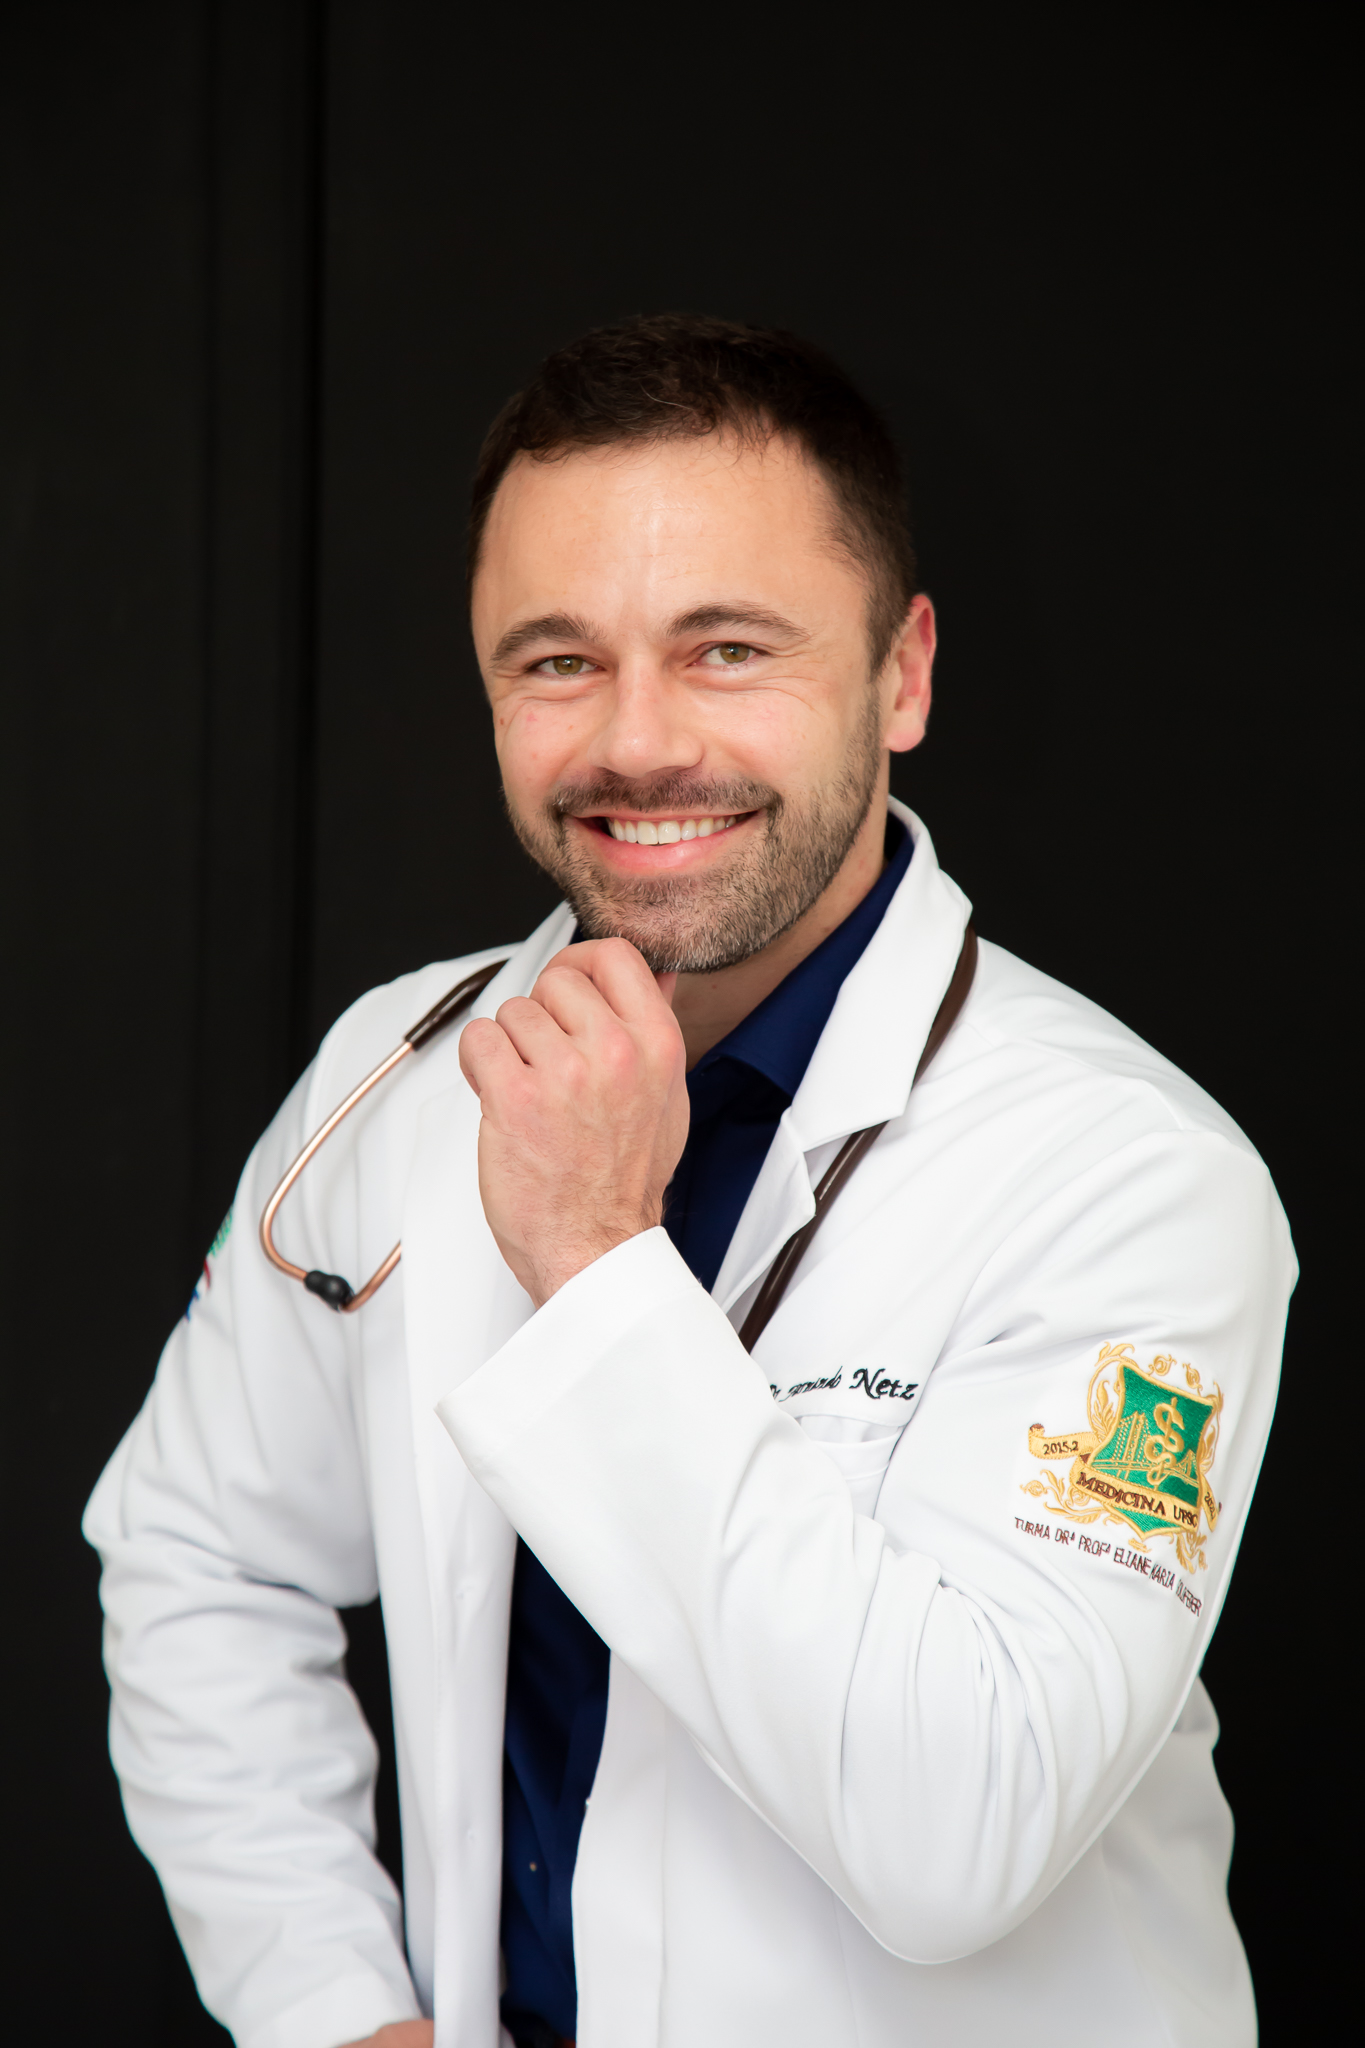 Dr. Fernando Netz